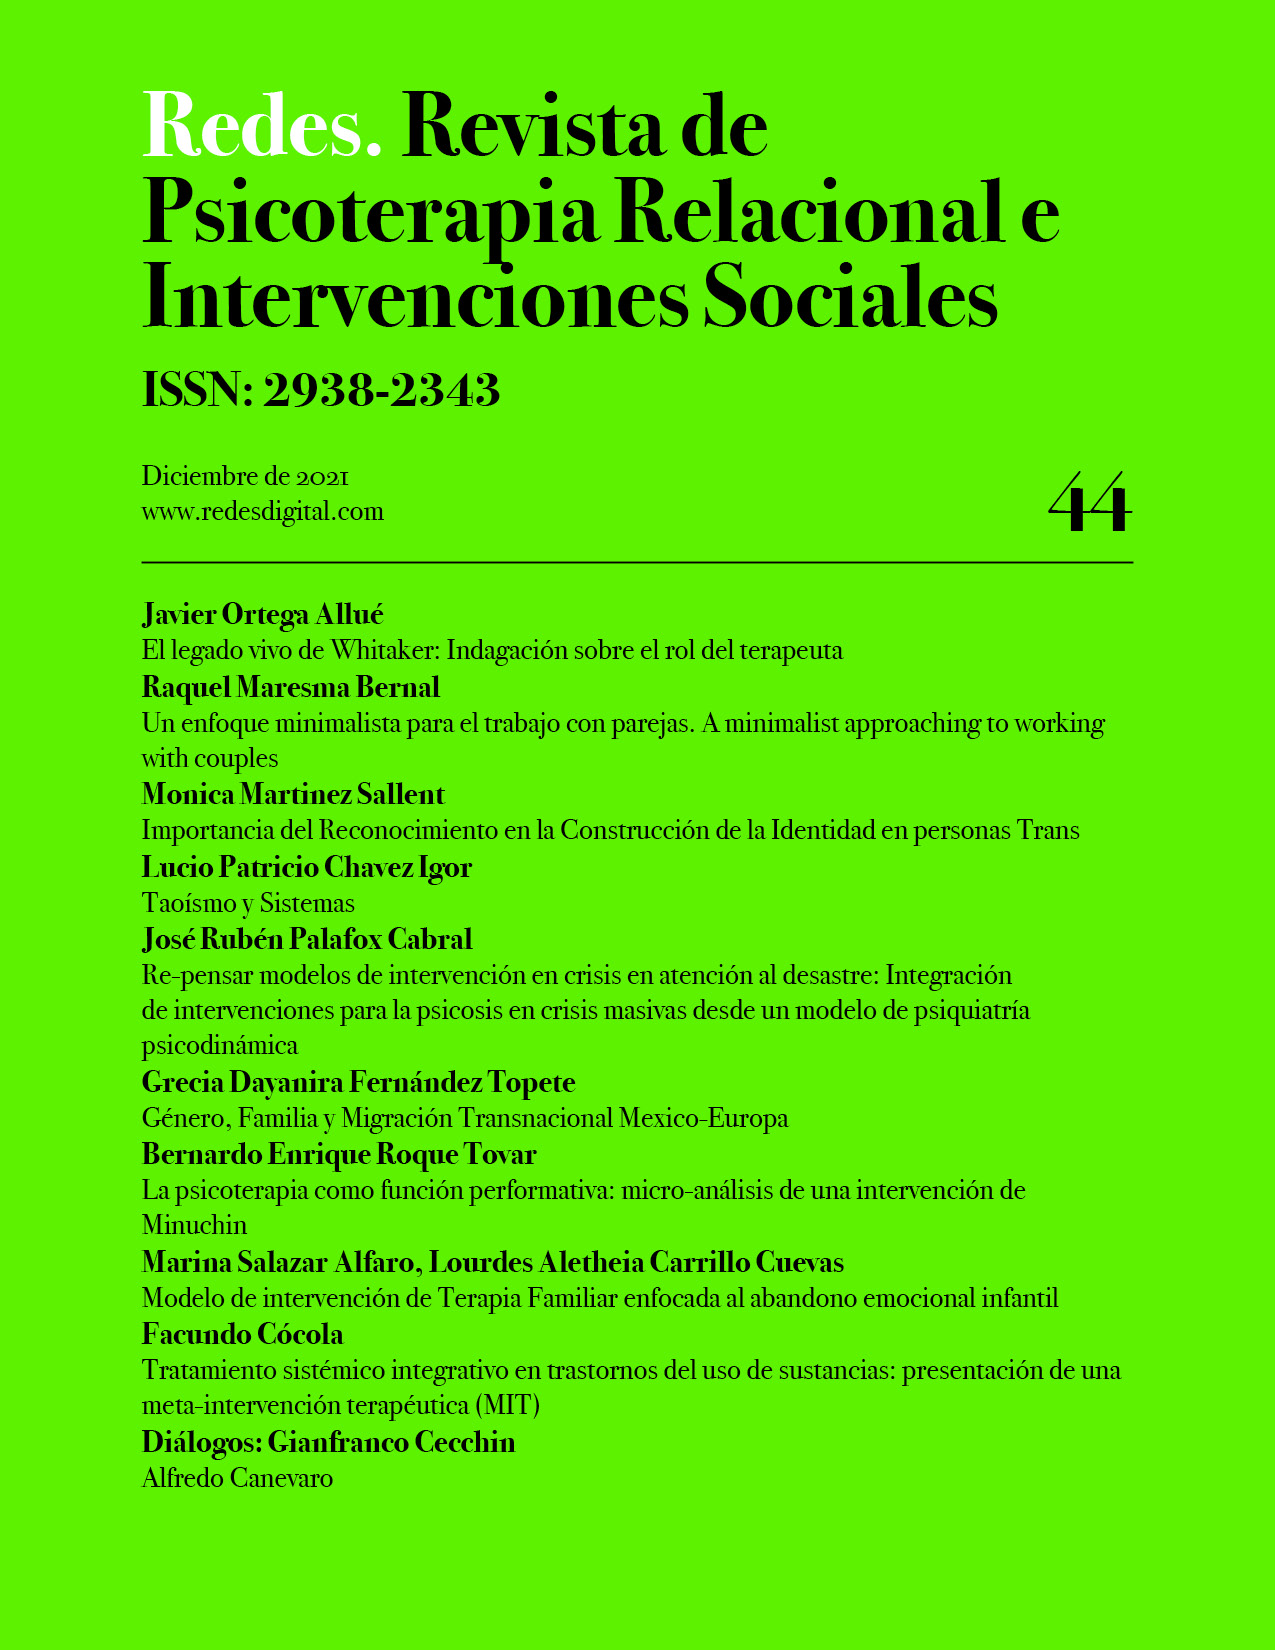 Redes. Revista de Psicoterapia Relacional e Intervenciones Sociales. Diciembre, 2021